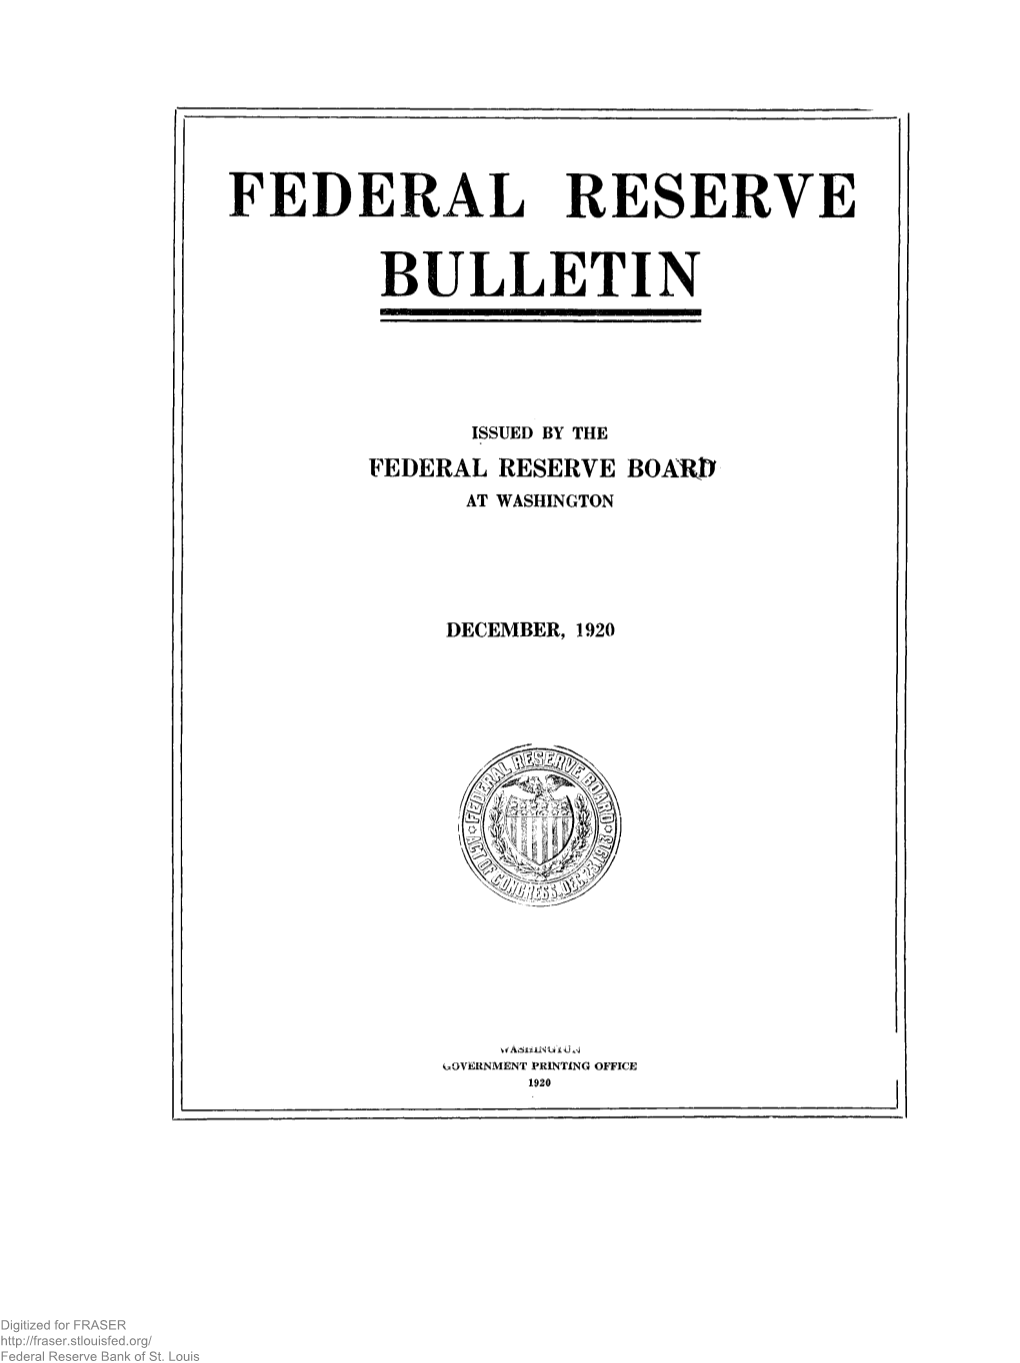 Federal Reserve Bulletin December 1920